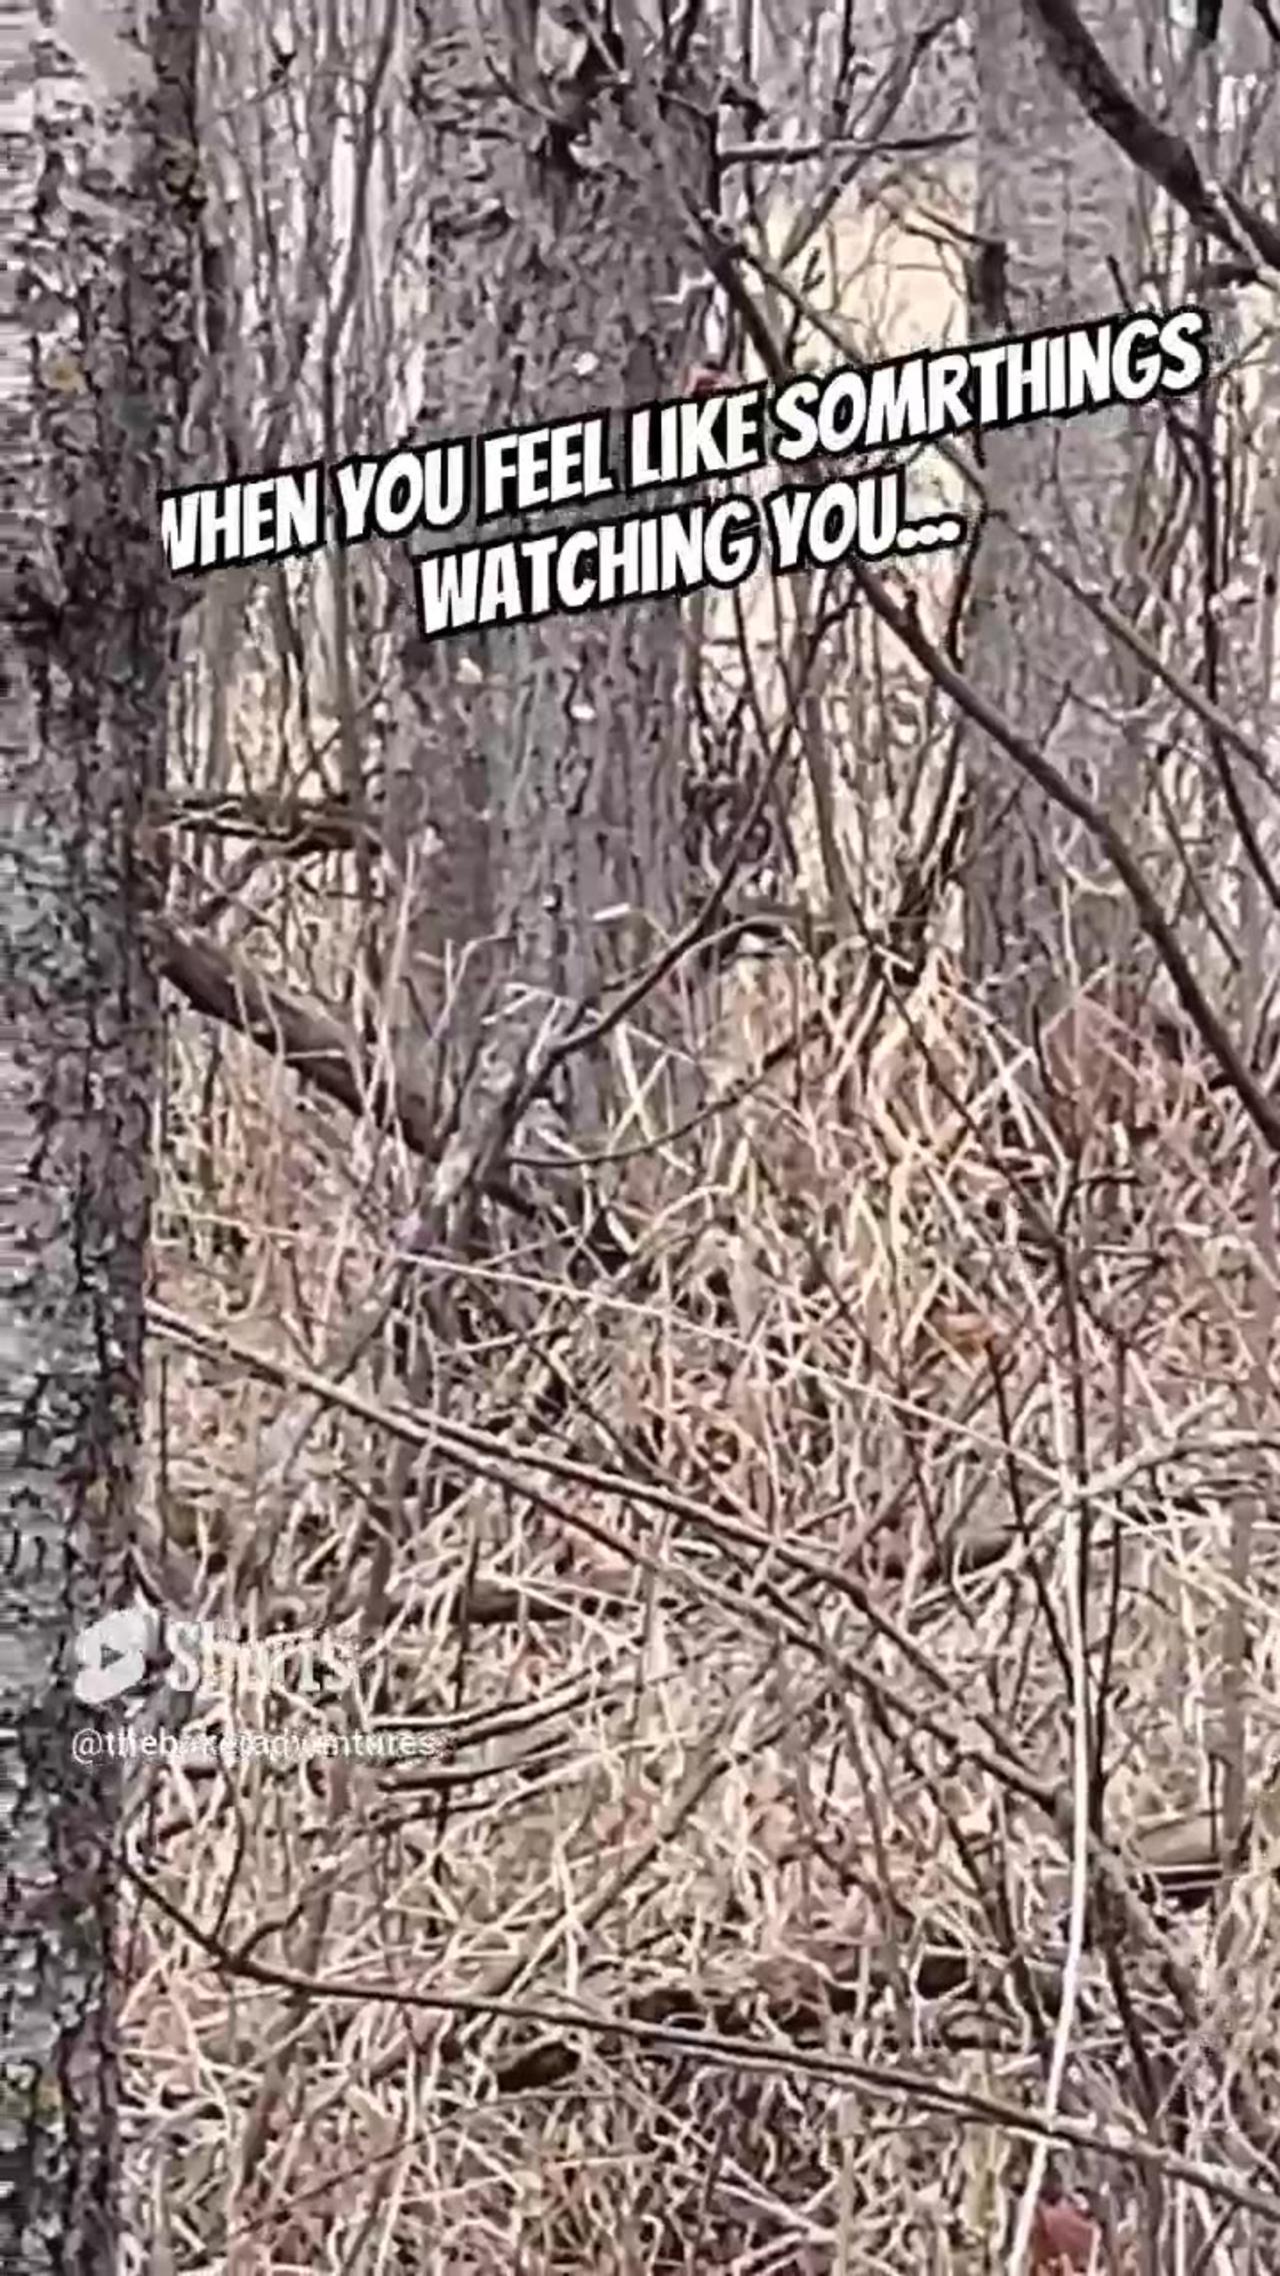 Somethings Watching You!! #outdoors #wildlife #shorts